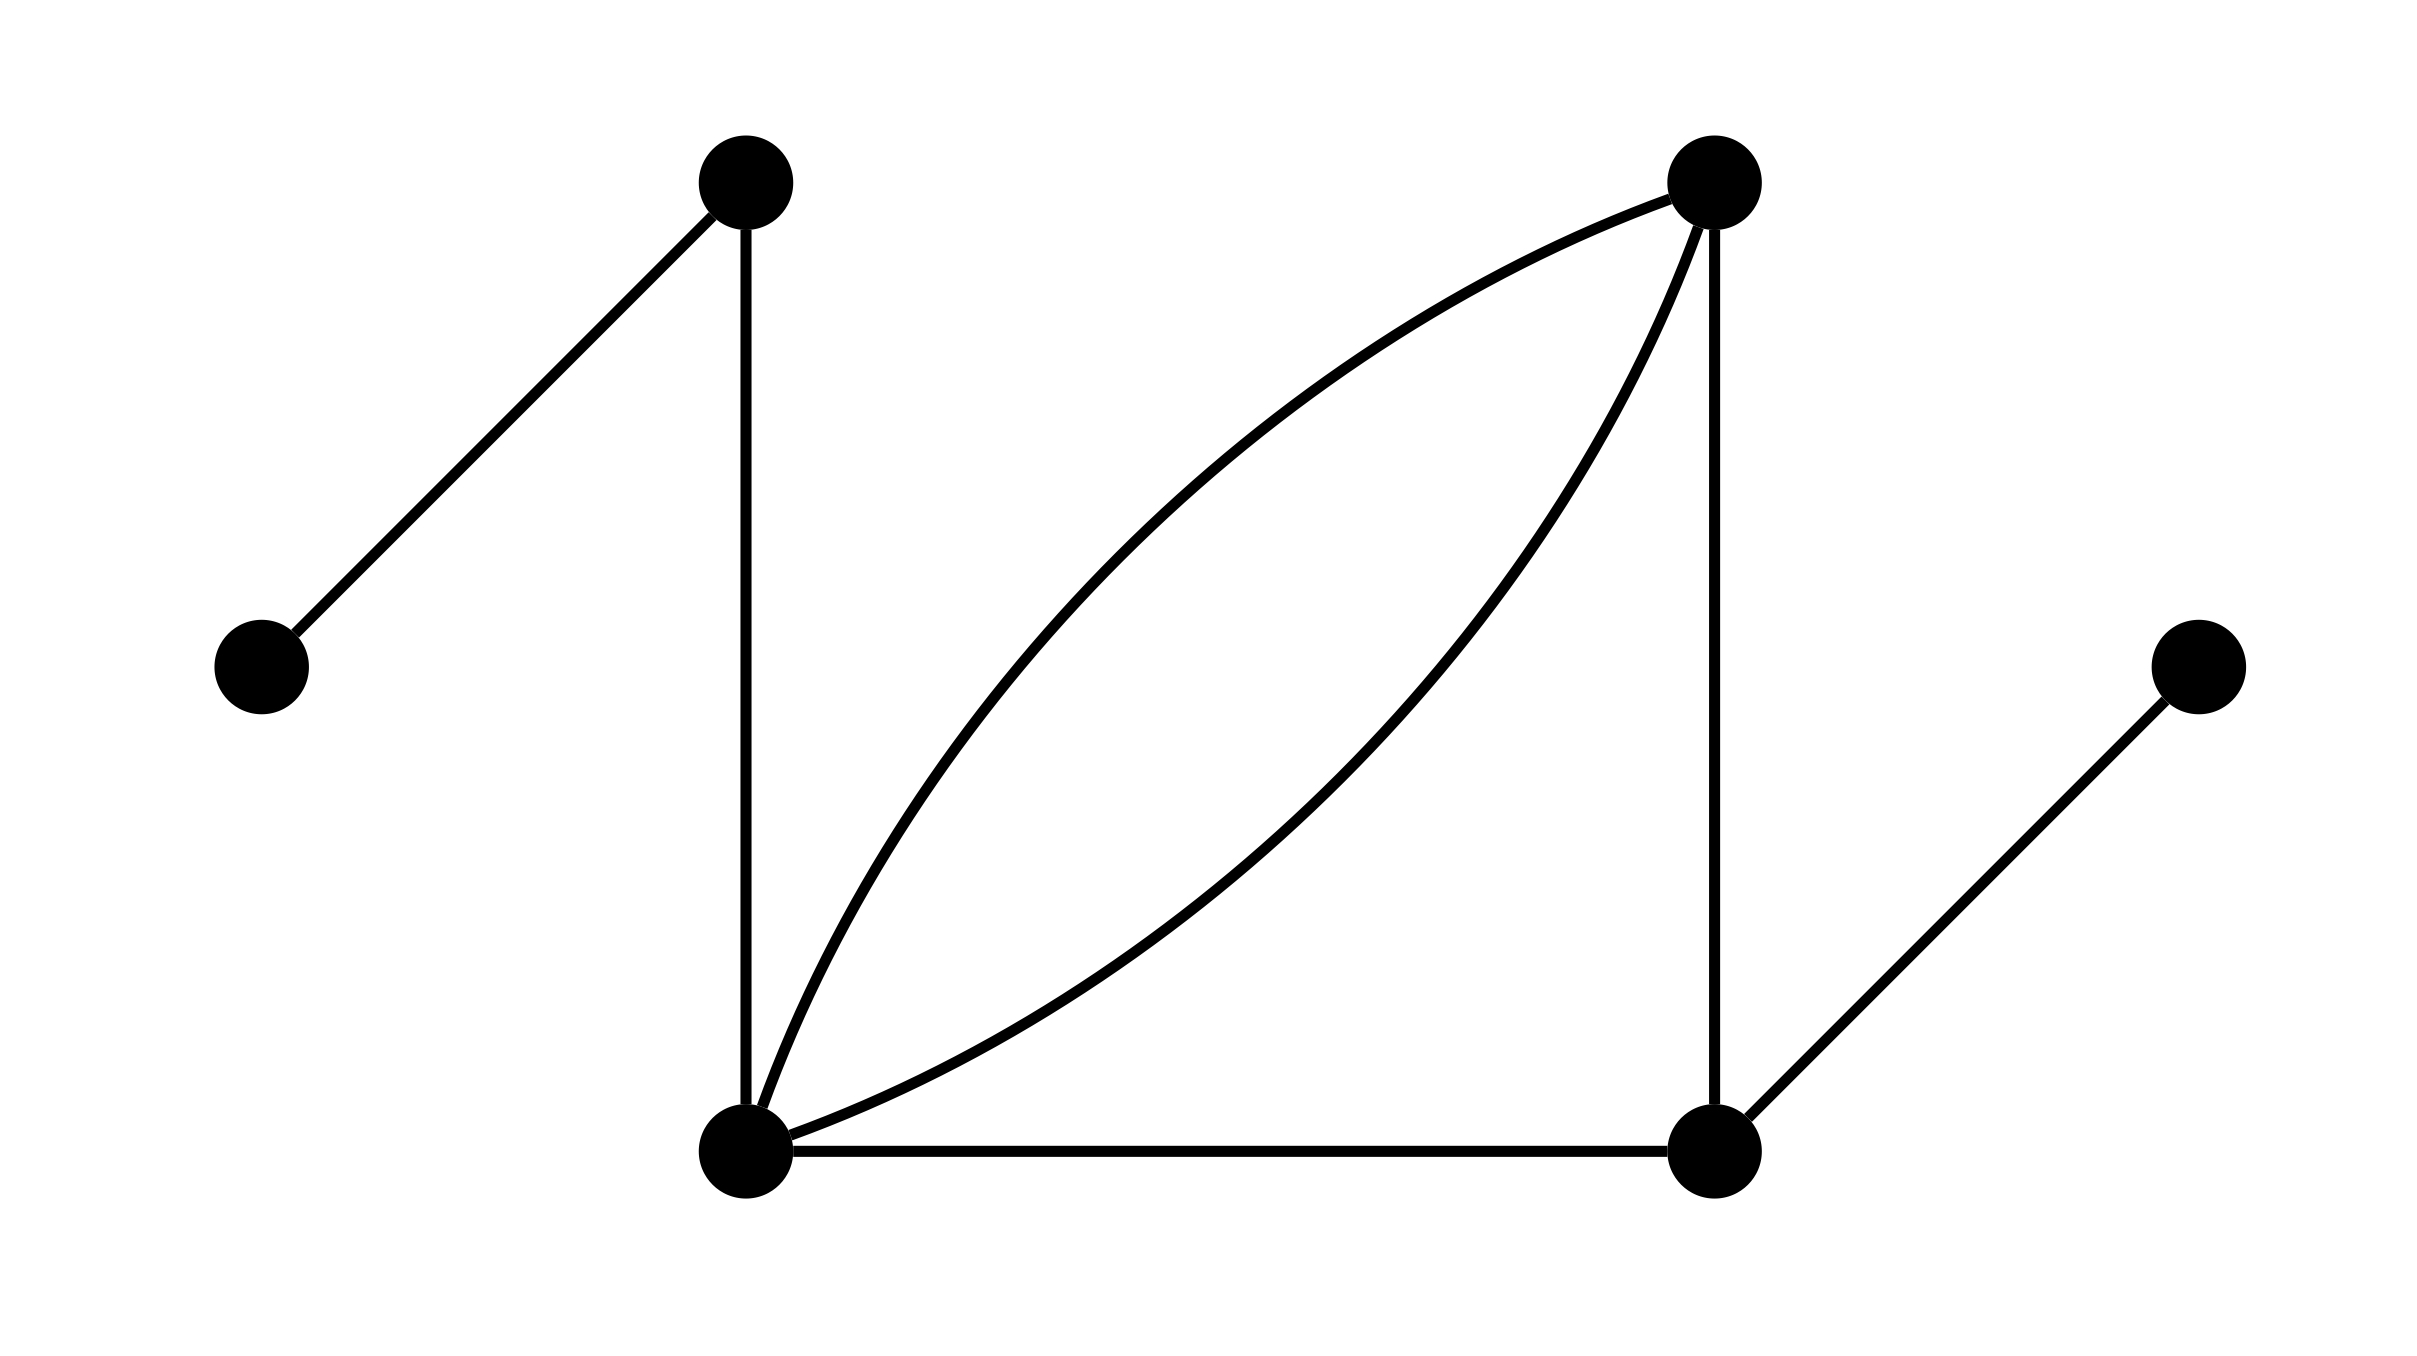 six vertex planar graph. Vertices A, B, C, D, E, F. Edges are A to B, B to C, C connected to D twice, C to E, D to E, E to F.